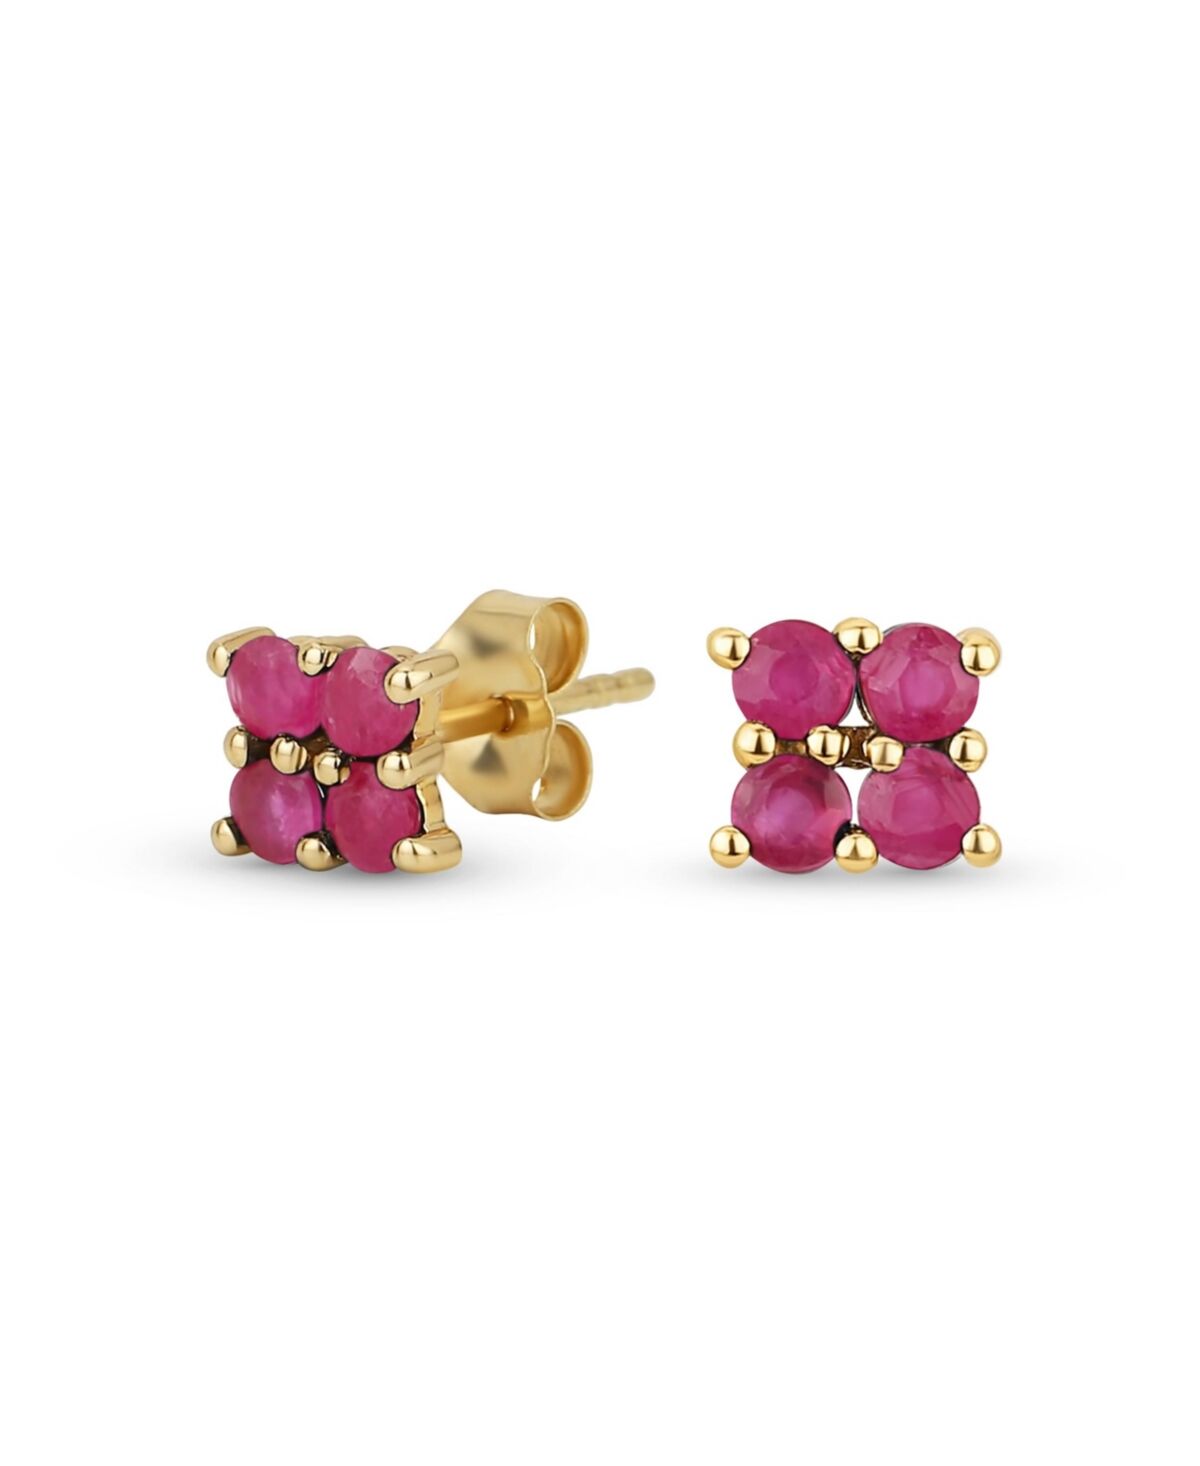 Bling Jewelry Minimalist Geometric Genuine 14K Yellow Gold Square Gemstone Stud Earrings for Women Teens - Red